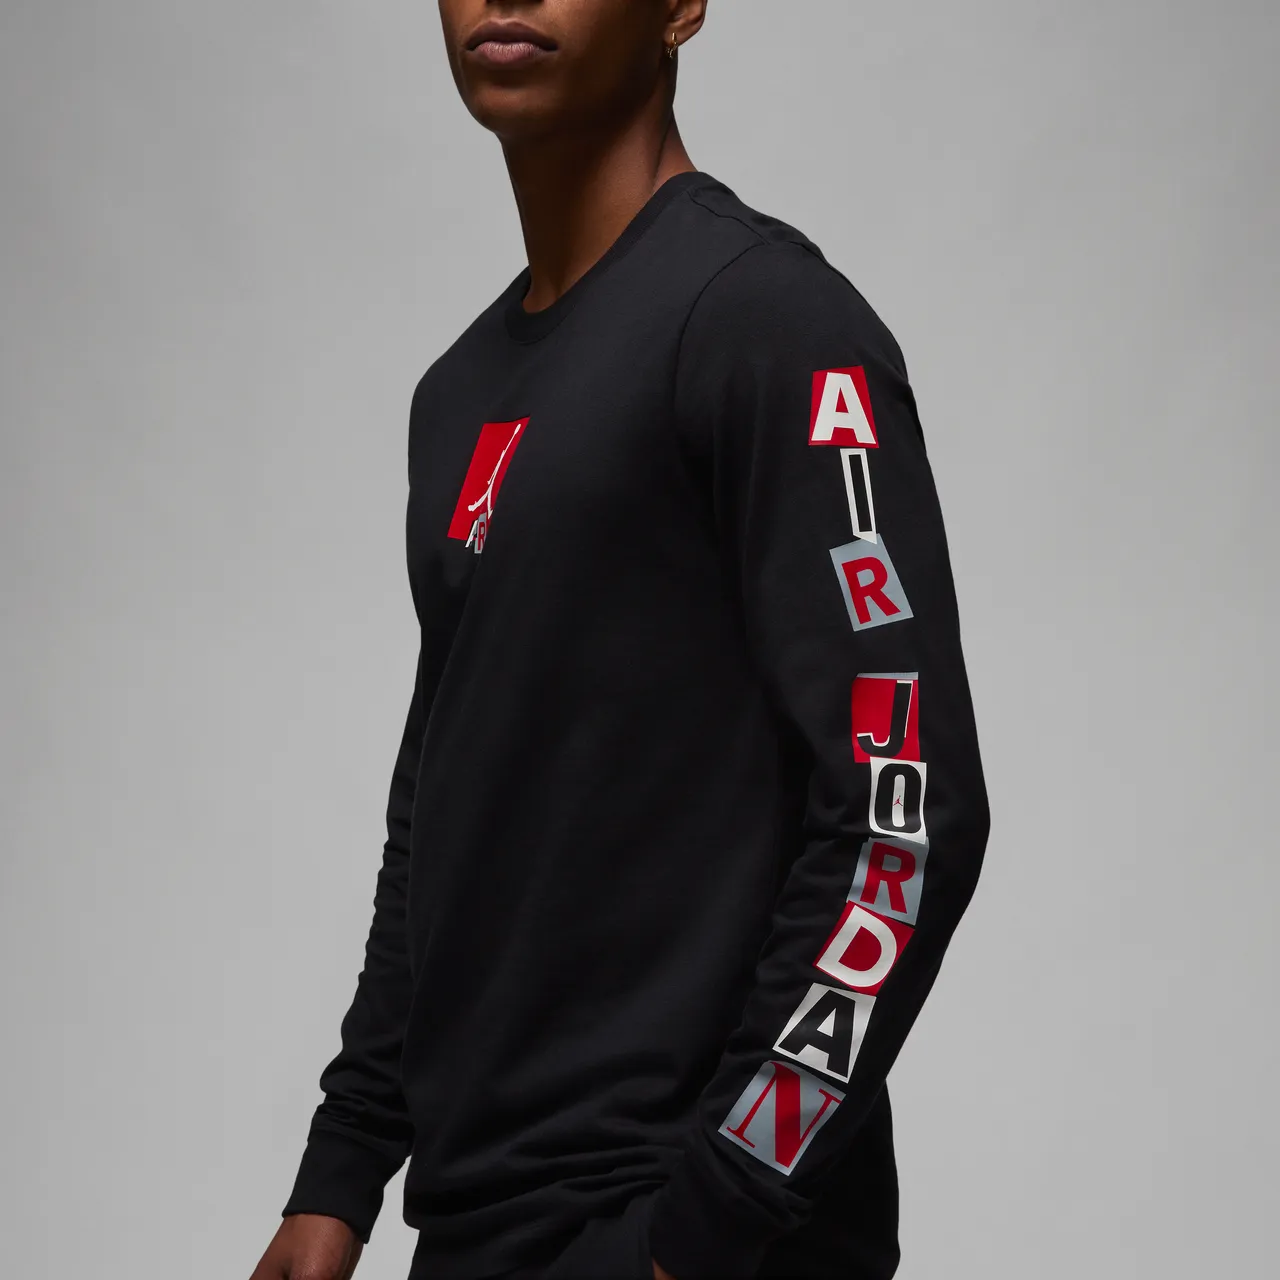 Jordan Brand Men's Graphic Long-Sleeve T-Shirt - Black - Cotton